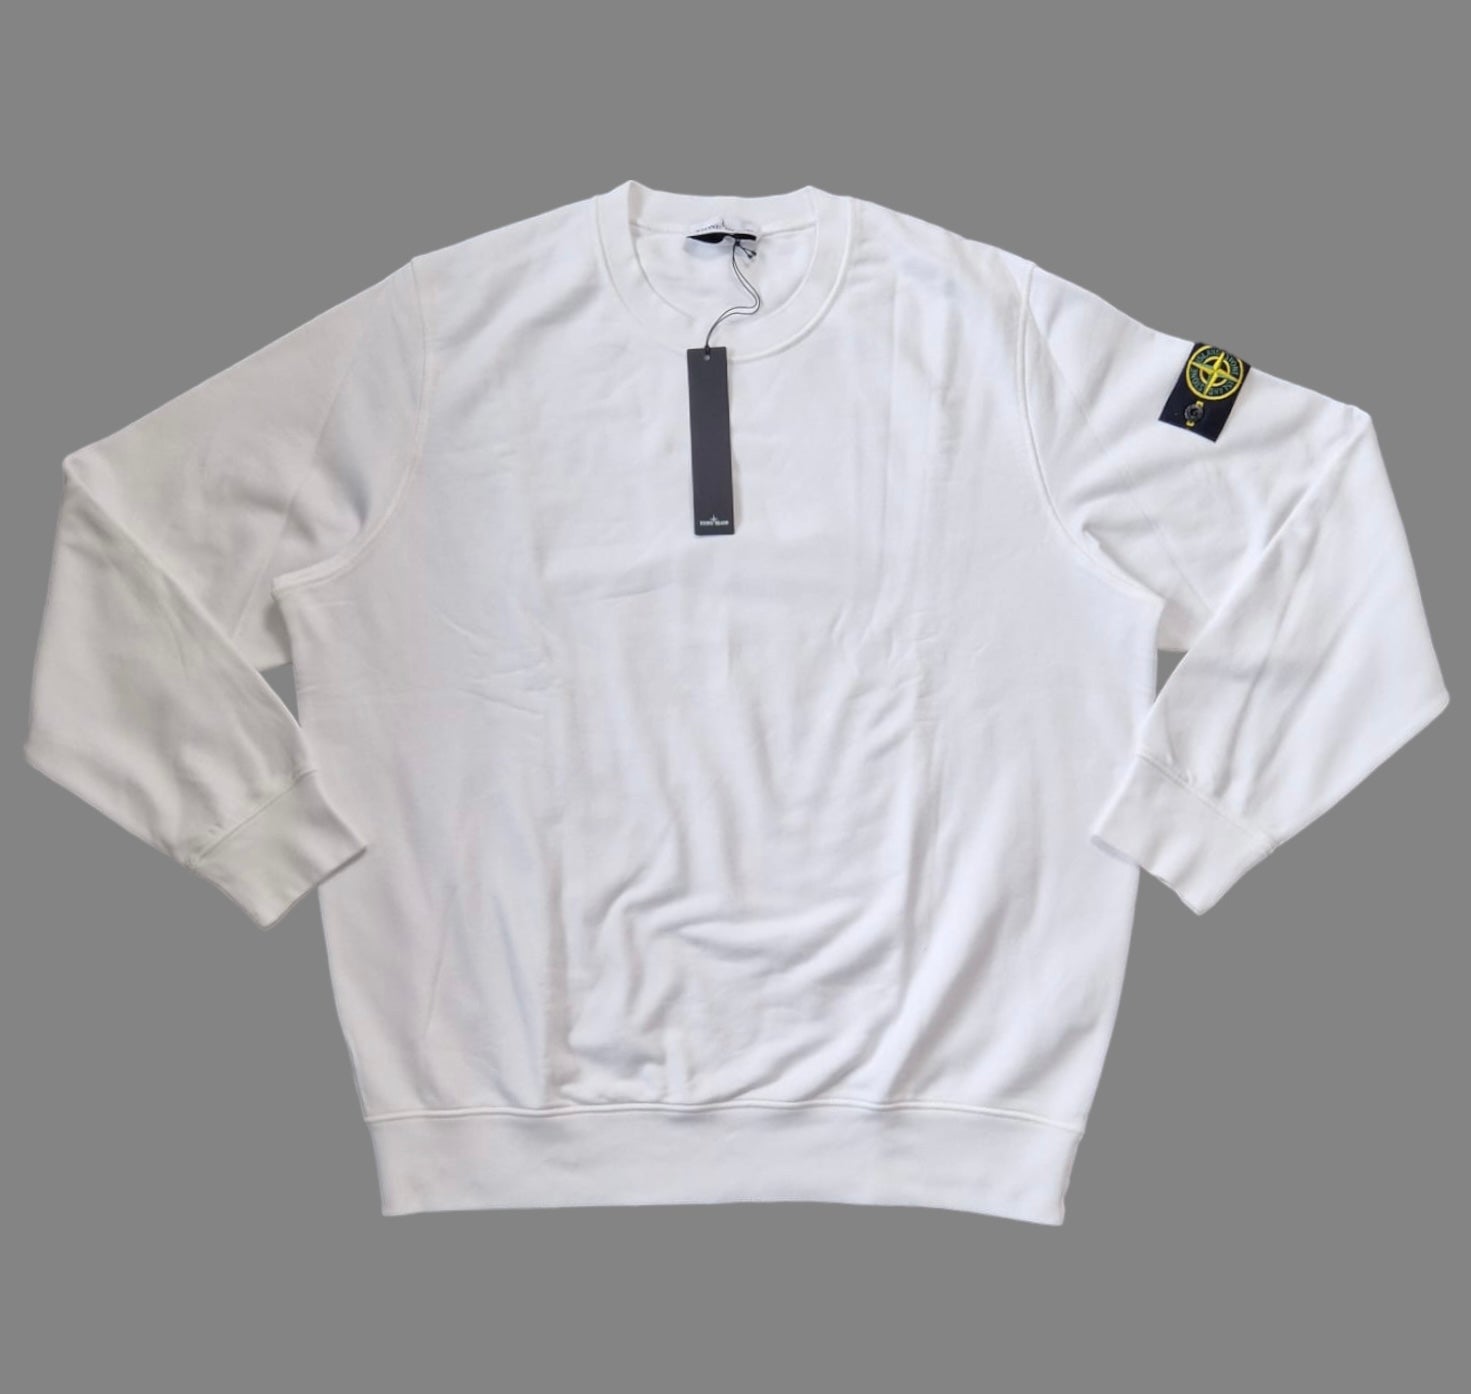 Stone Island Crewneck Sweatshirt - White - BNWT